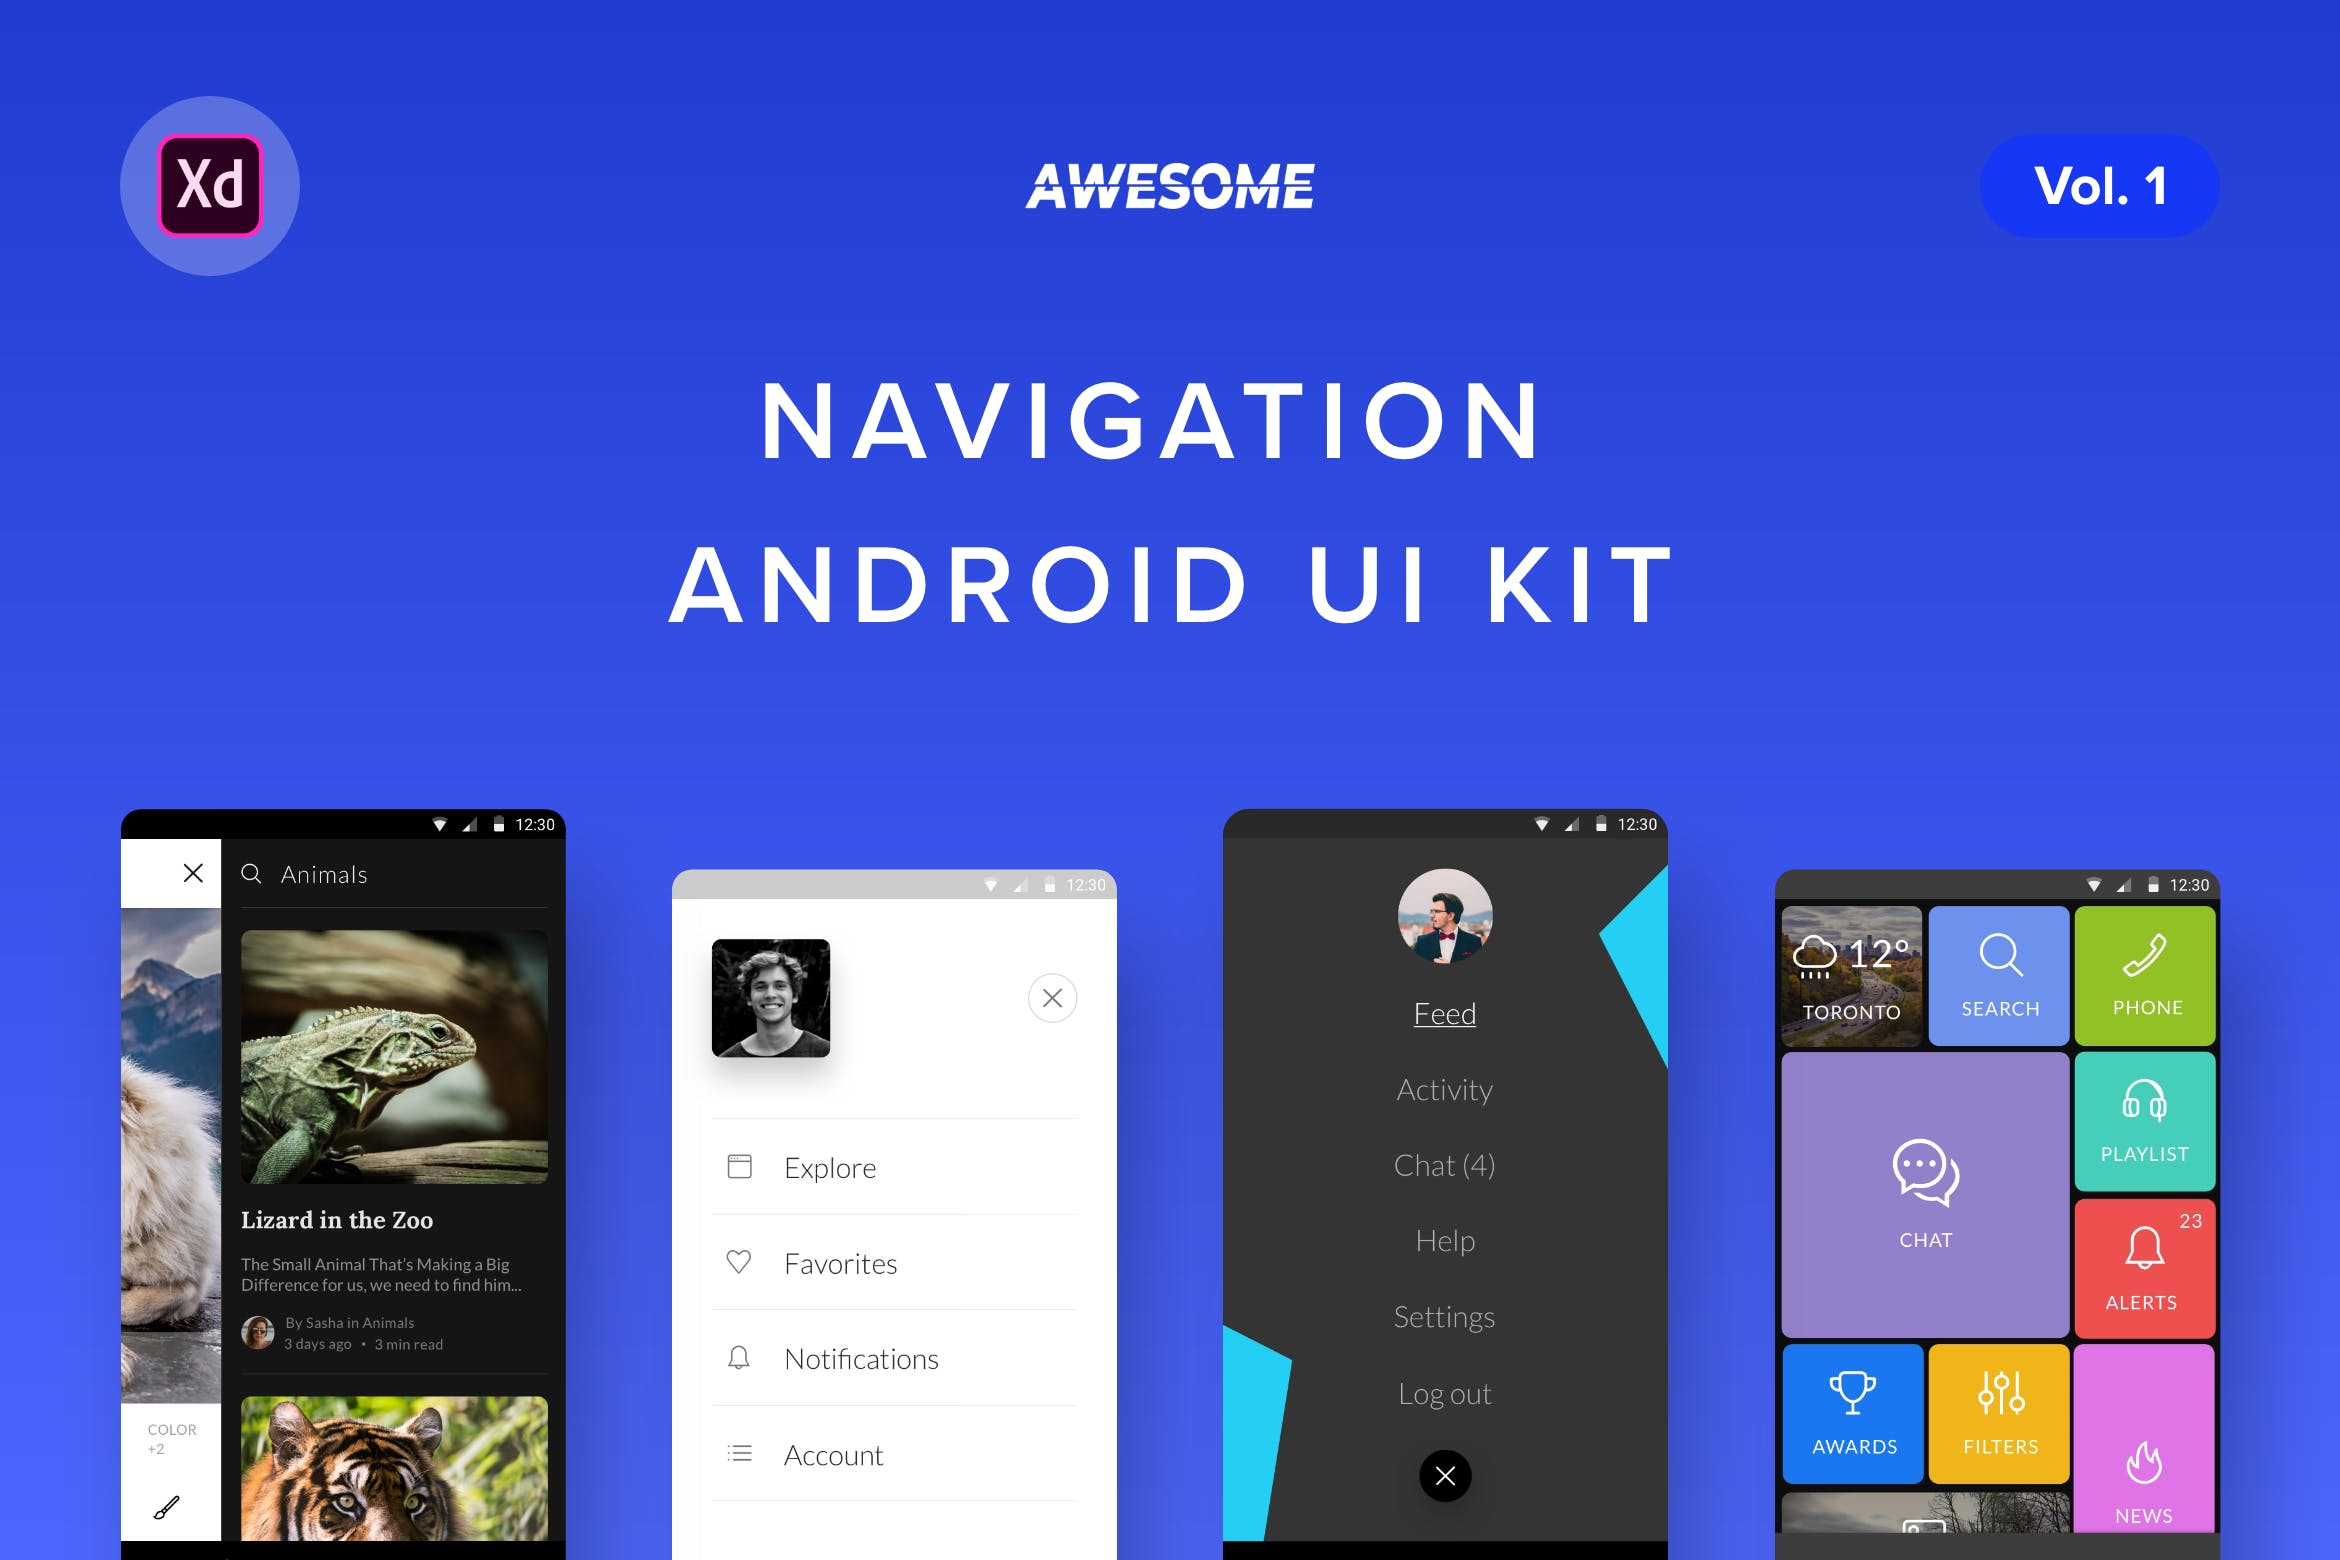 安卓平台APP应用导航设计UI模板v1[XD] Android UI Kit – Navigation Vol. 1 (Adobe XD)插图